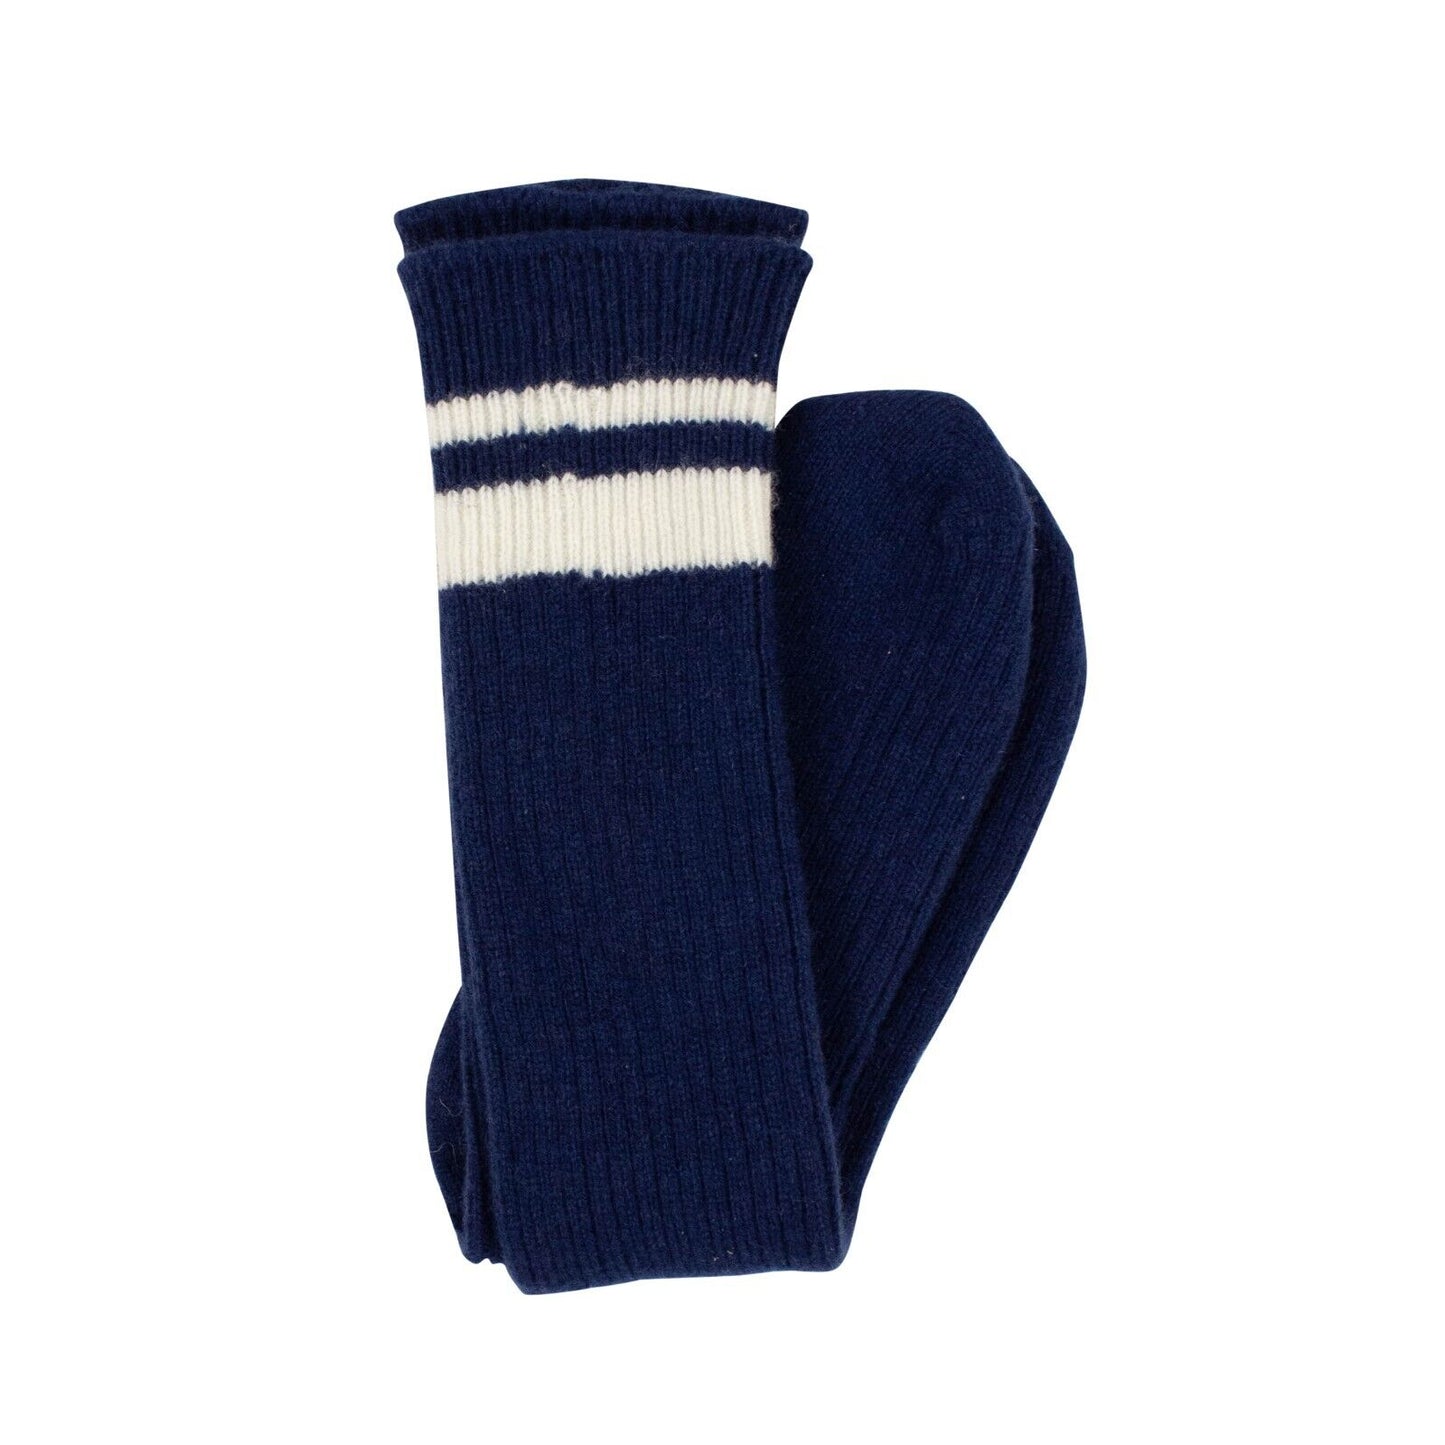 Unravel Project Socks